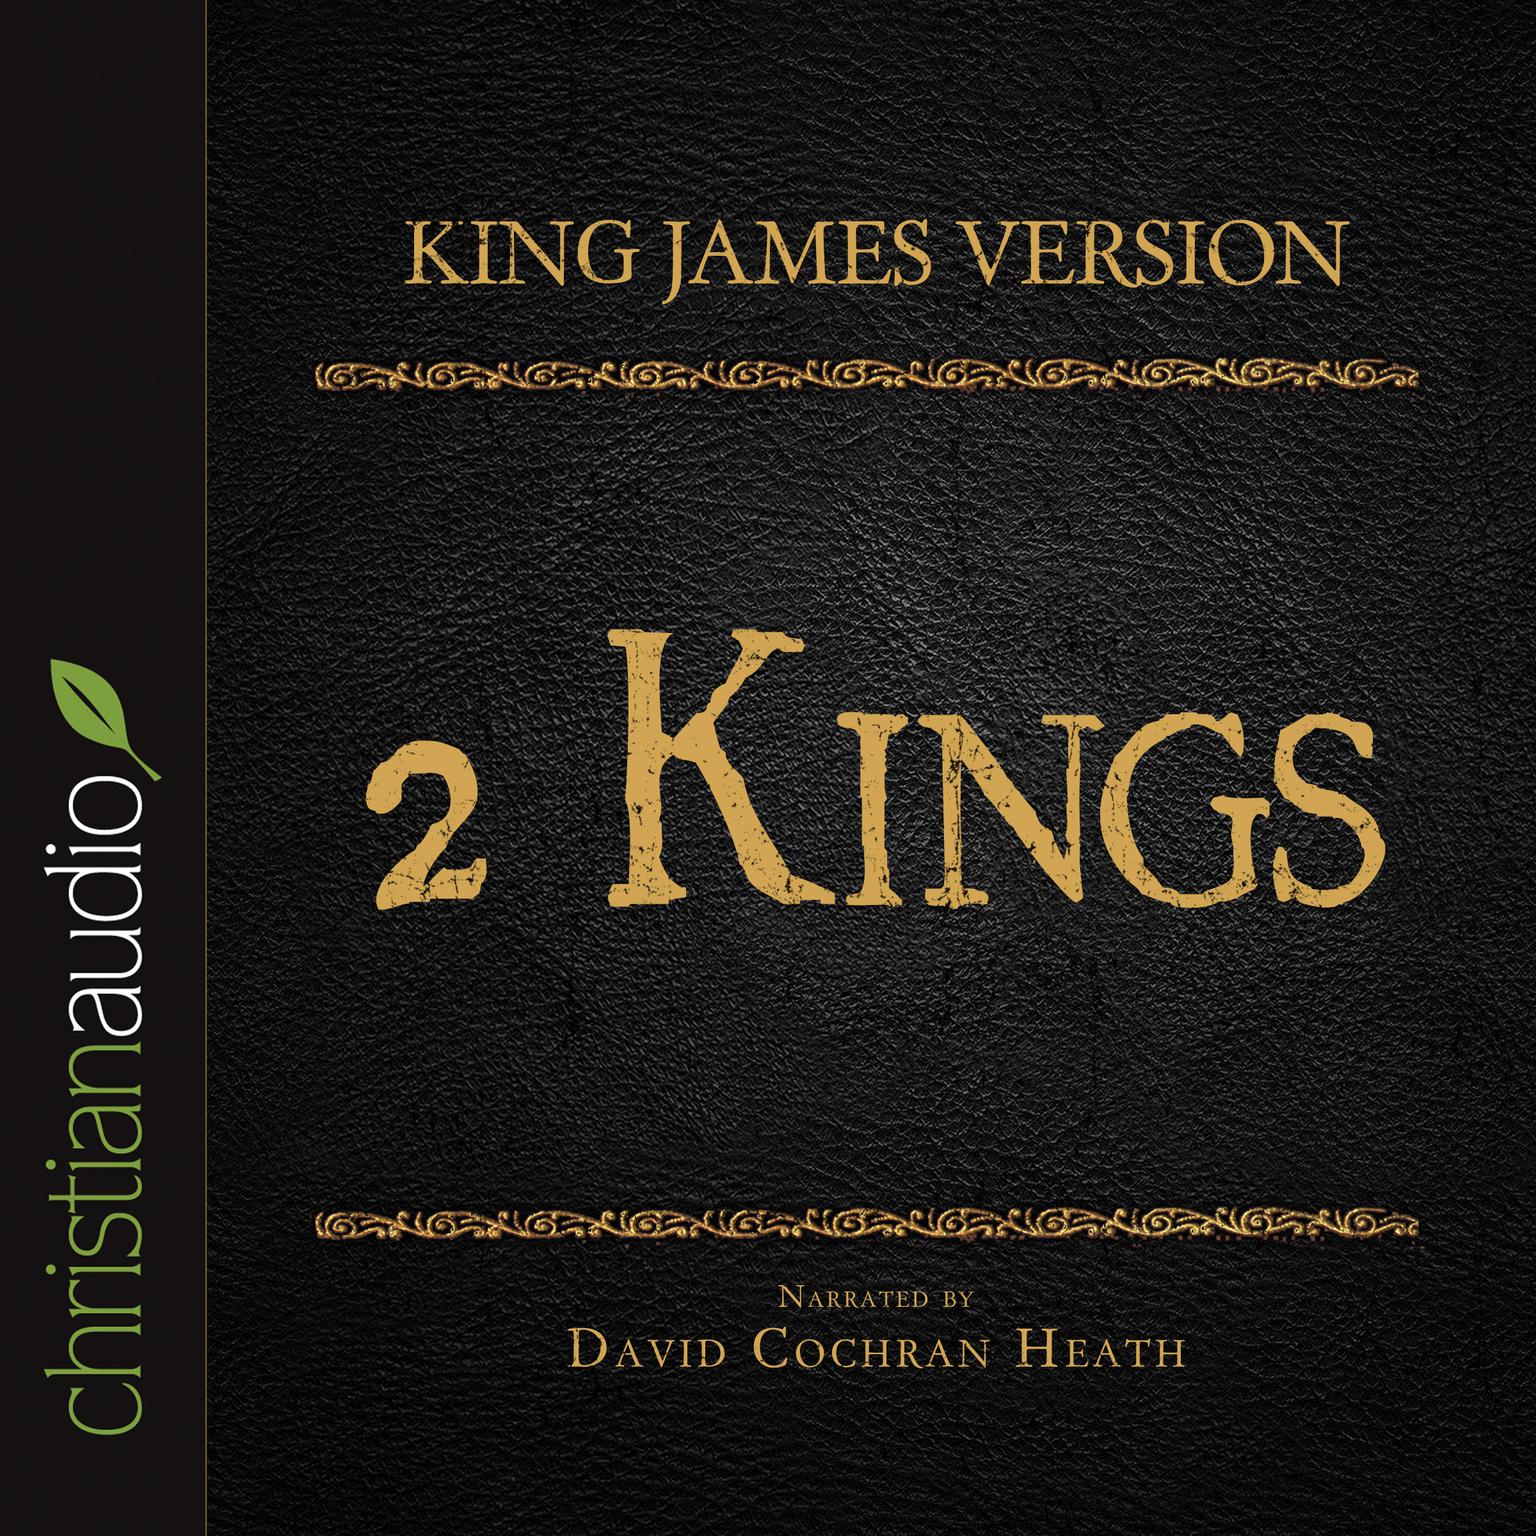 Holy Bible in Audio - King James Version: 2 Kings Audiobook, by David Cochran Heath